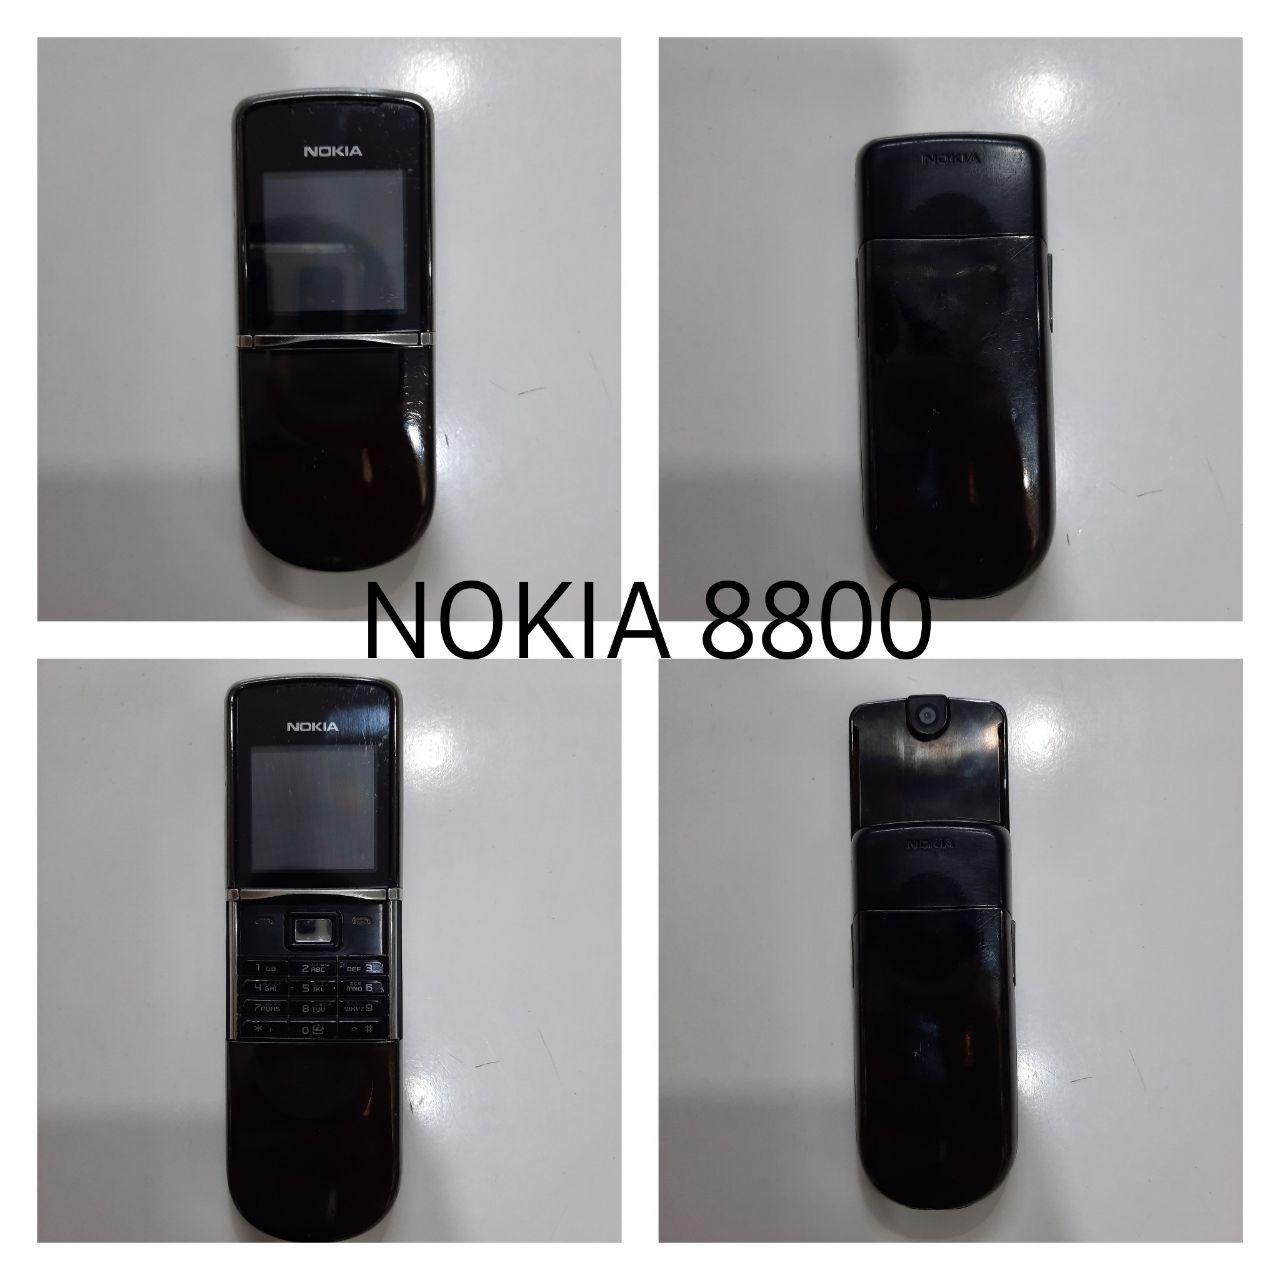 Nokia 8800 sotiladi